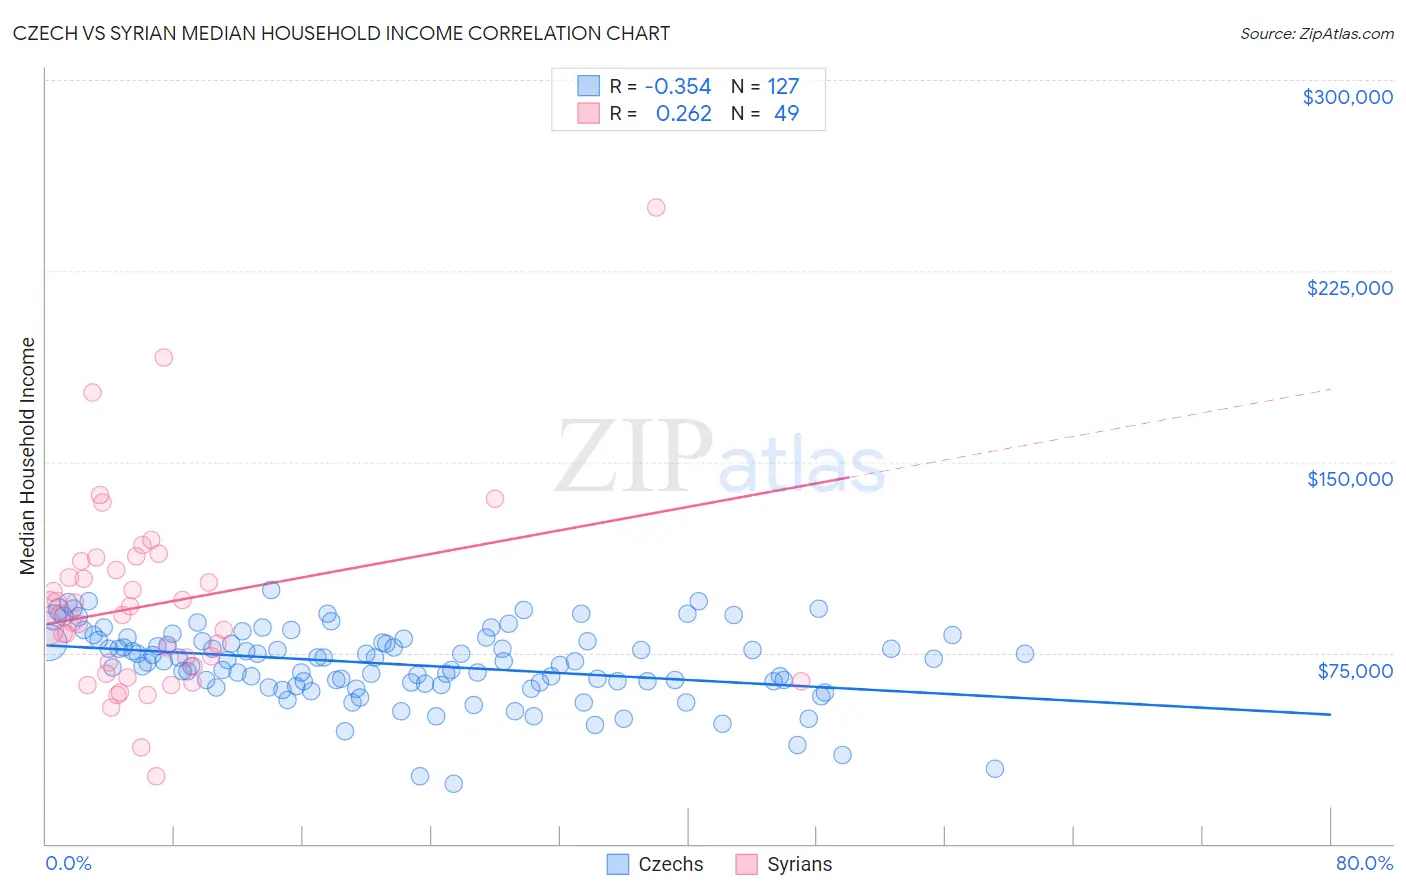 Czech vs Syrian Median Household Income